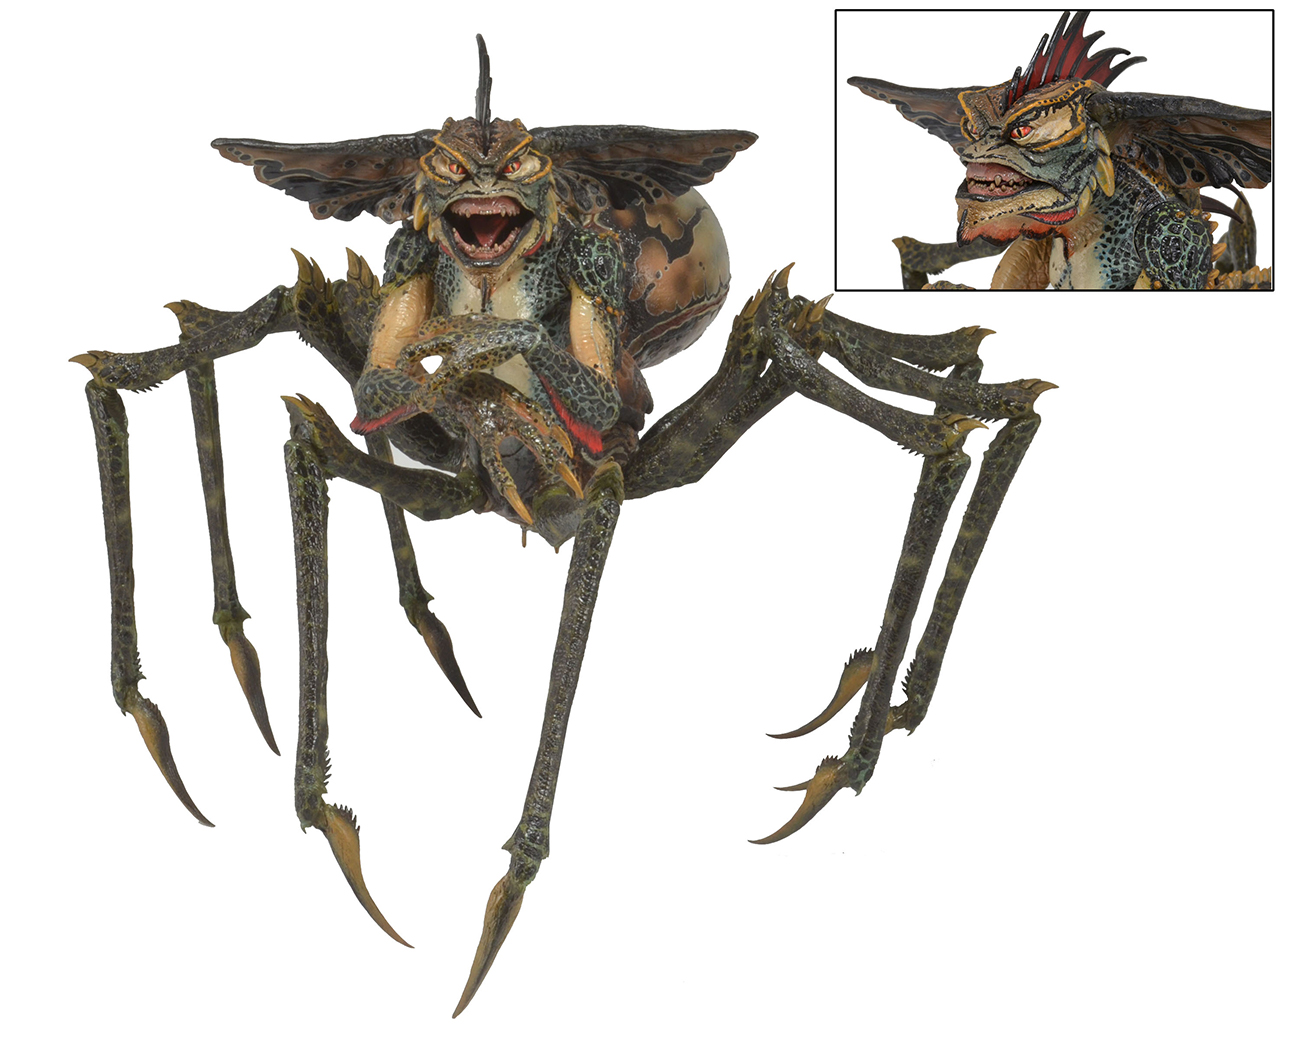 NECAOnline.com | Gremlins 2 - Deluxe Action Figure - Boxed Spider Gremlin